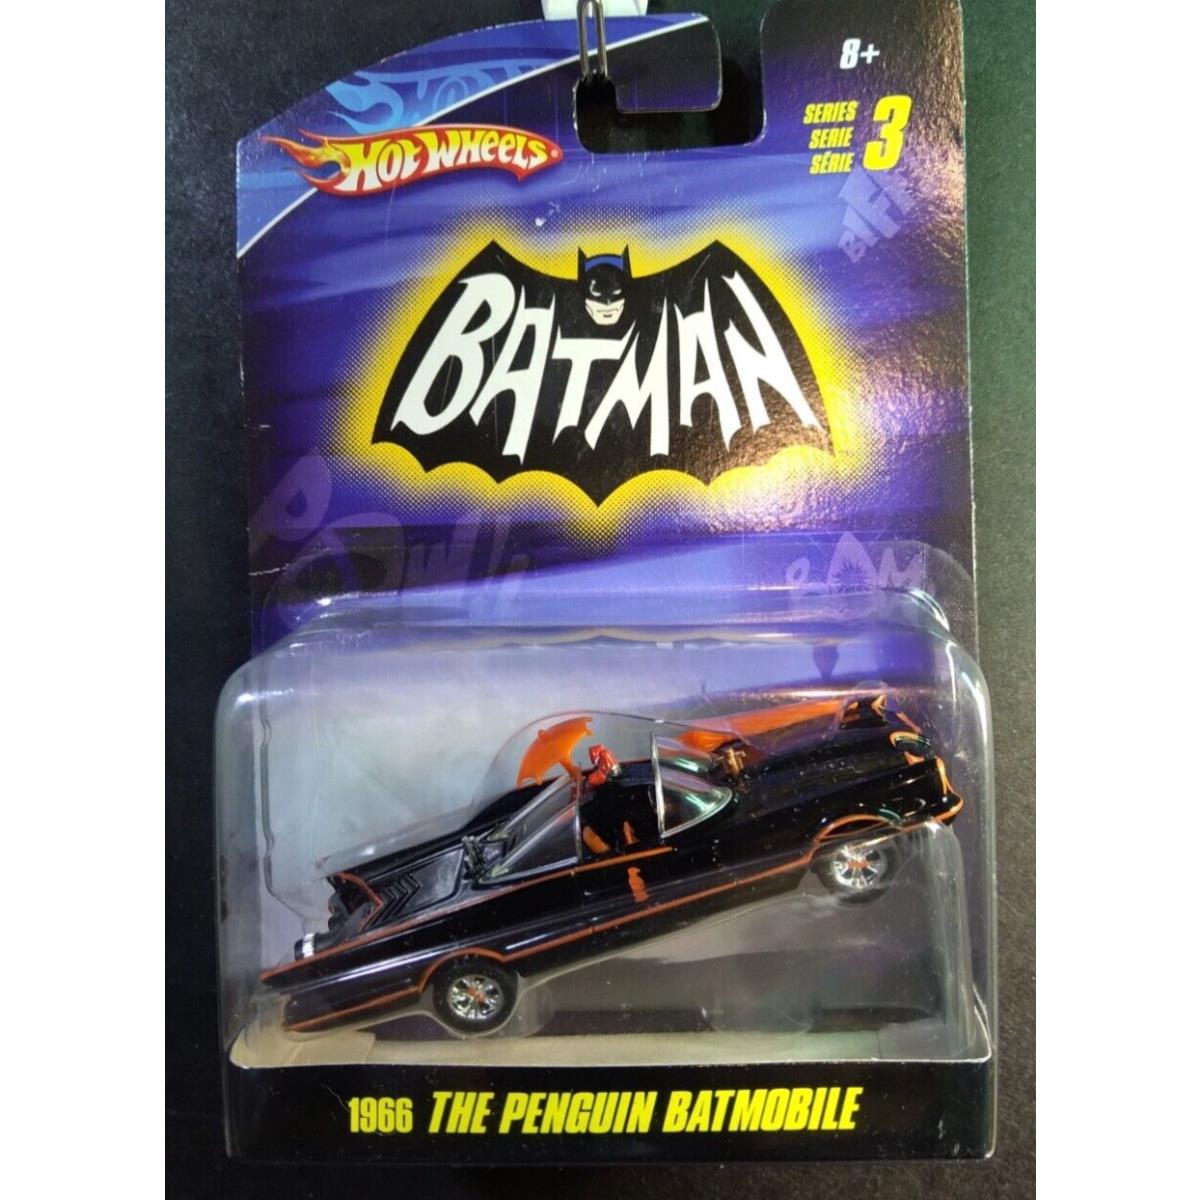 2010 Hot Wheels Batman 1966 The Penguin Batmobile Rare Series 3 Vhtf